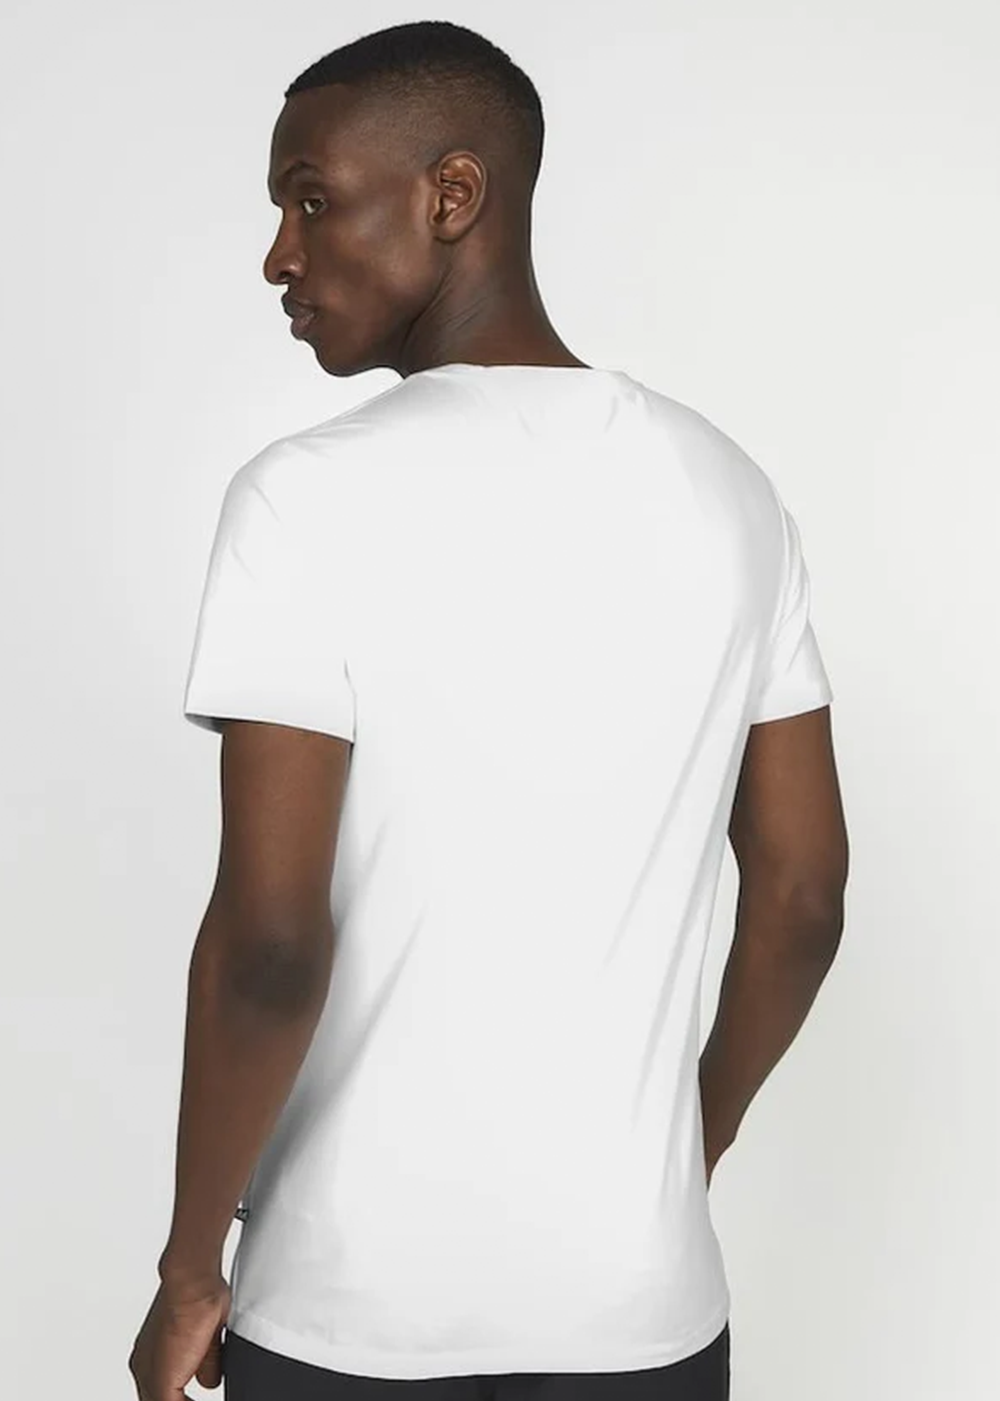 Jermalink Cotton Stretch T-Shirt